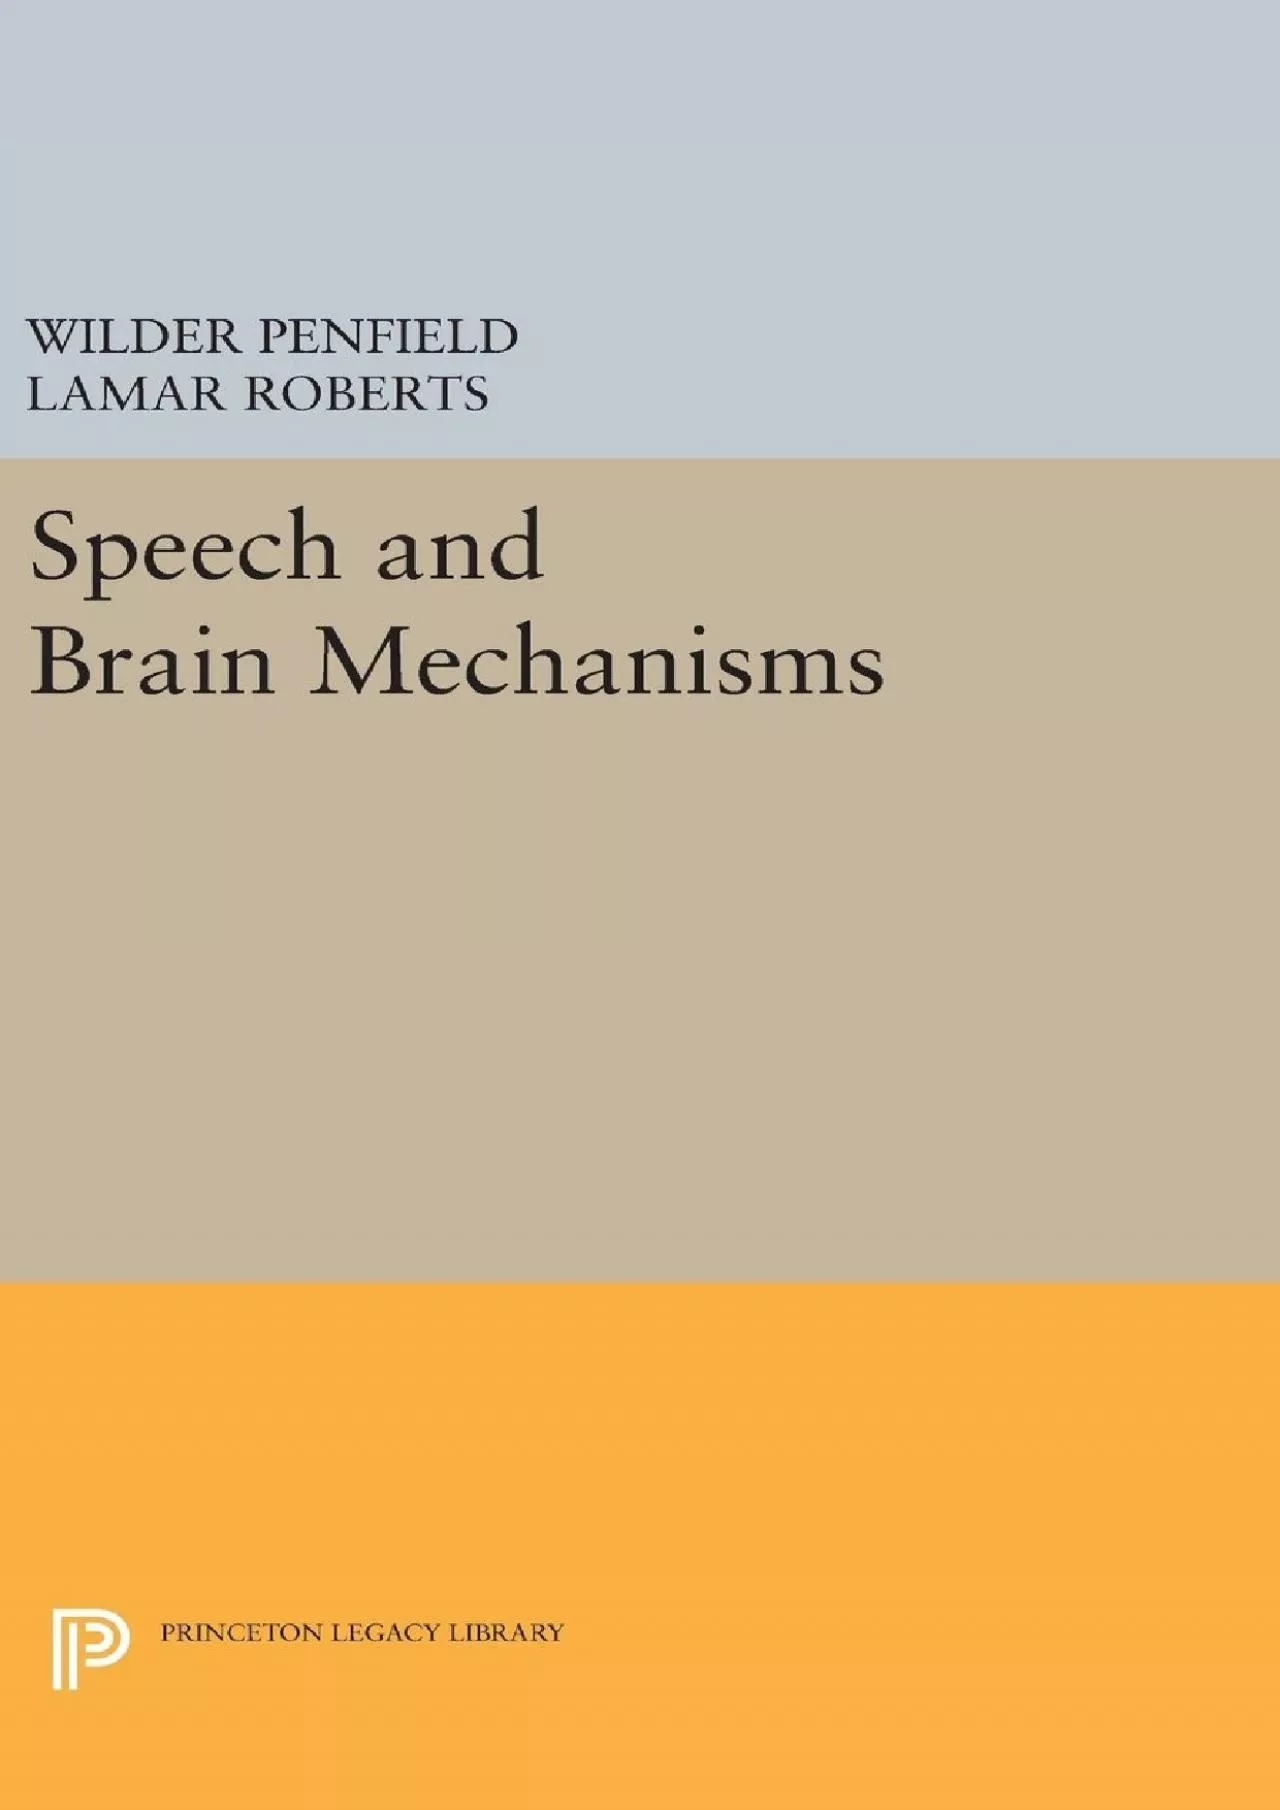 (BOOK)-Speech and Brain Mechanisms (Princeton Legacy Library, 62)